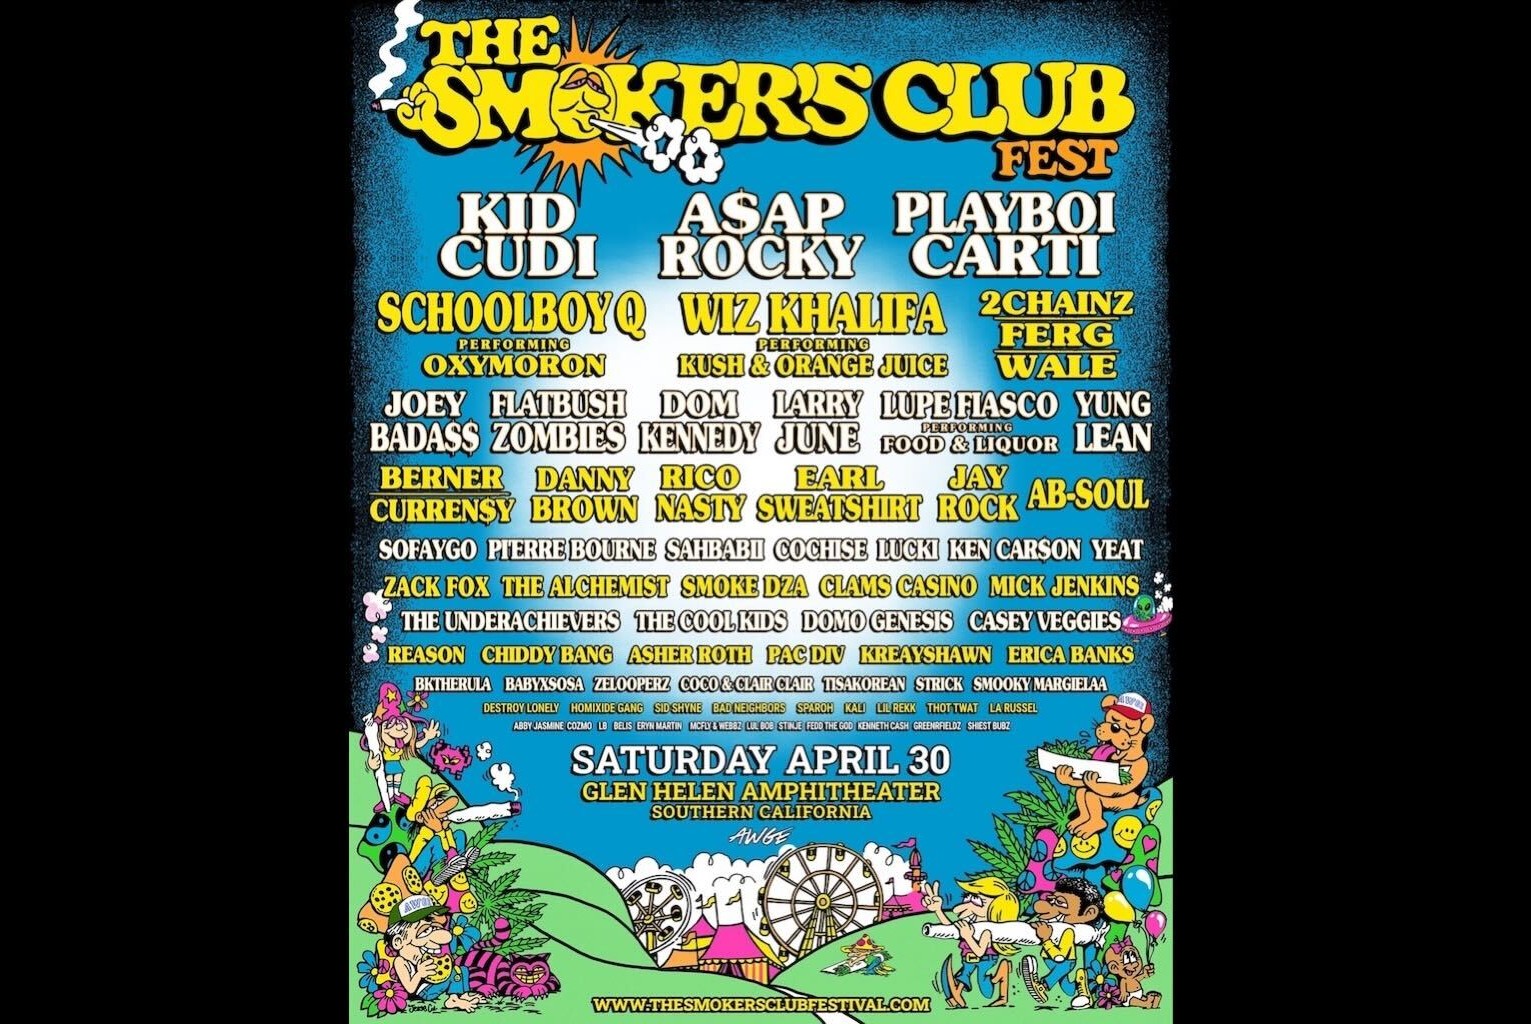 Kid Cudi, A$AP Rocky, Playboi Carti & More To Rock The Smokers Club Fest